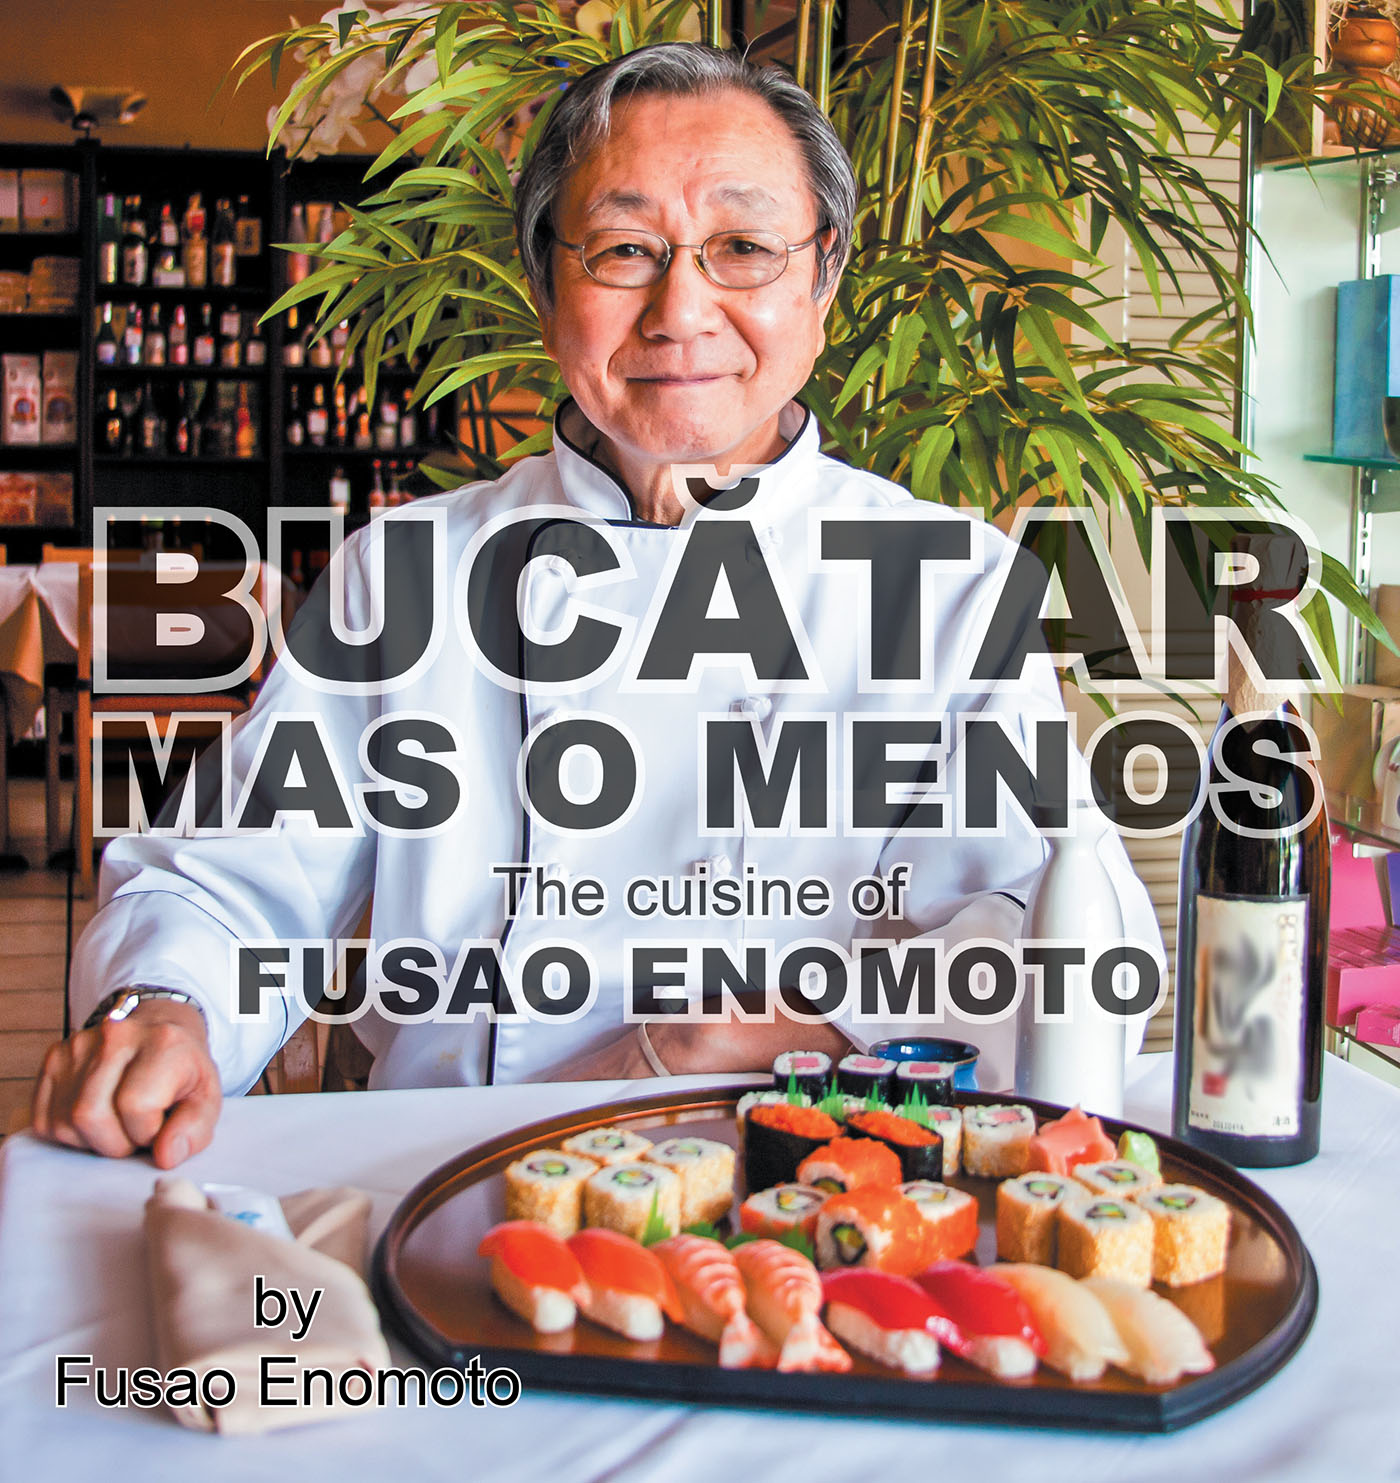 Author Fusao Enomoto’s New Book, “Bucatar Mas O Menos: The Cuisine of Fusao Enomoto,” Celebrates the Author’s 60 Years of Experience in the Culinary Arts